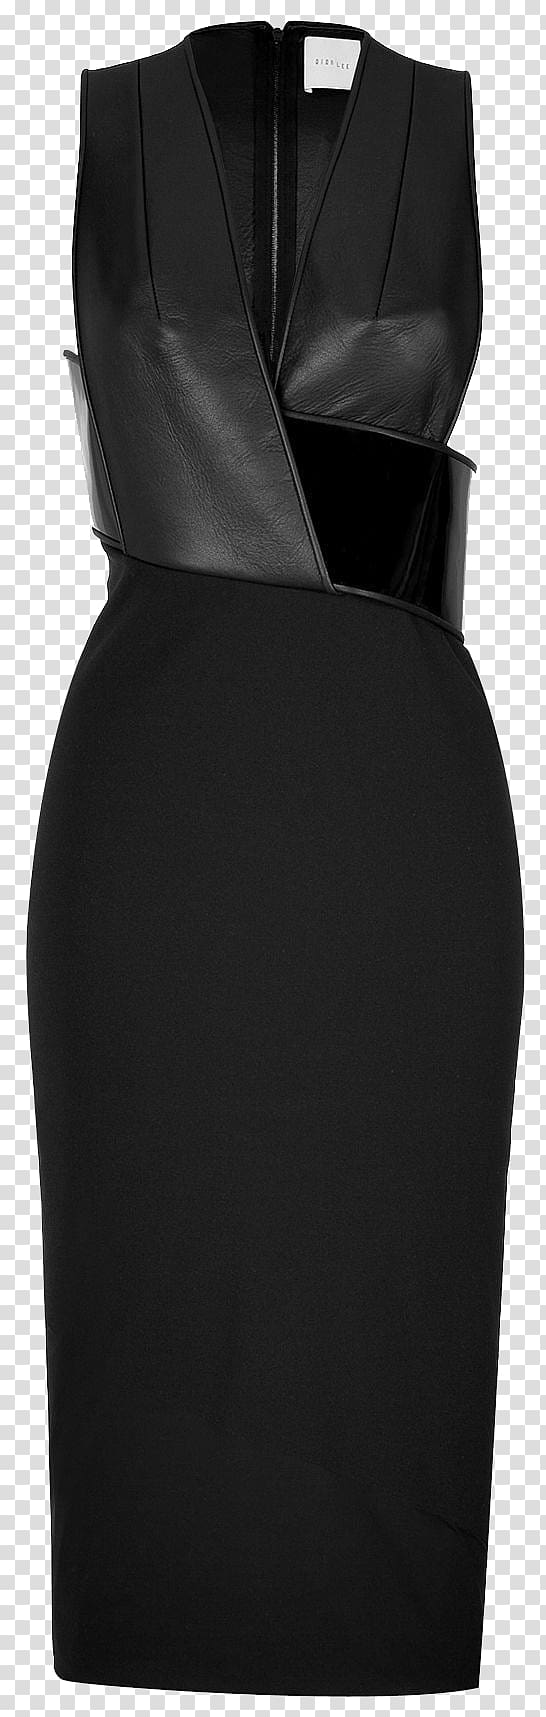 women's black sleeveless dress, Fashion design Dress Haute couture Woman, Women\'s Skirts transparent background PNG clipart